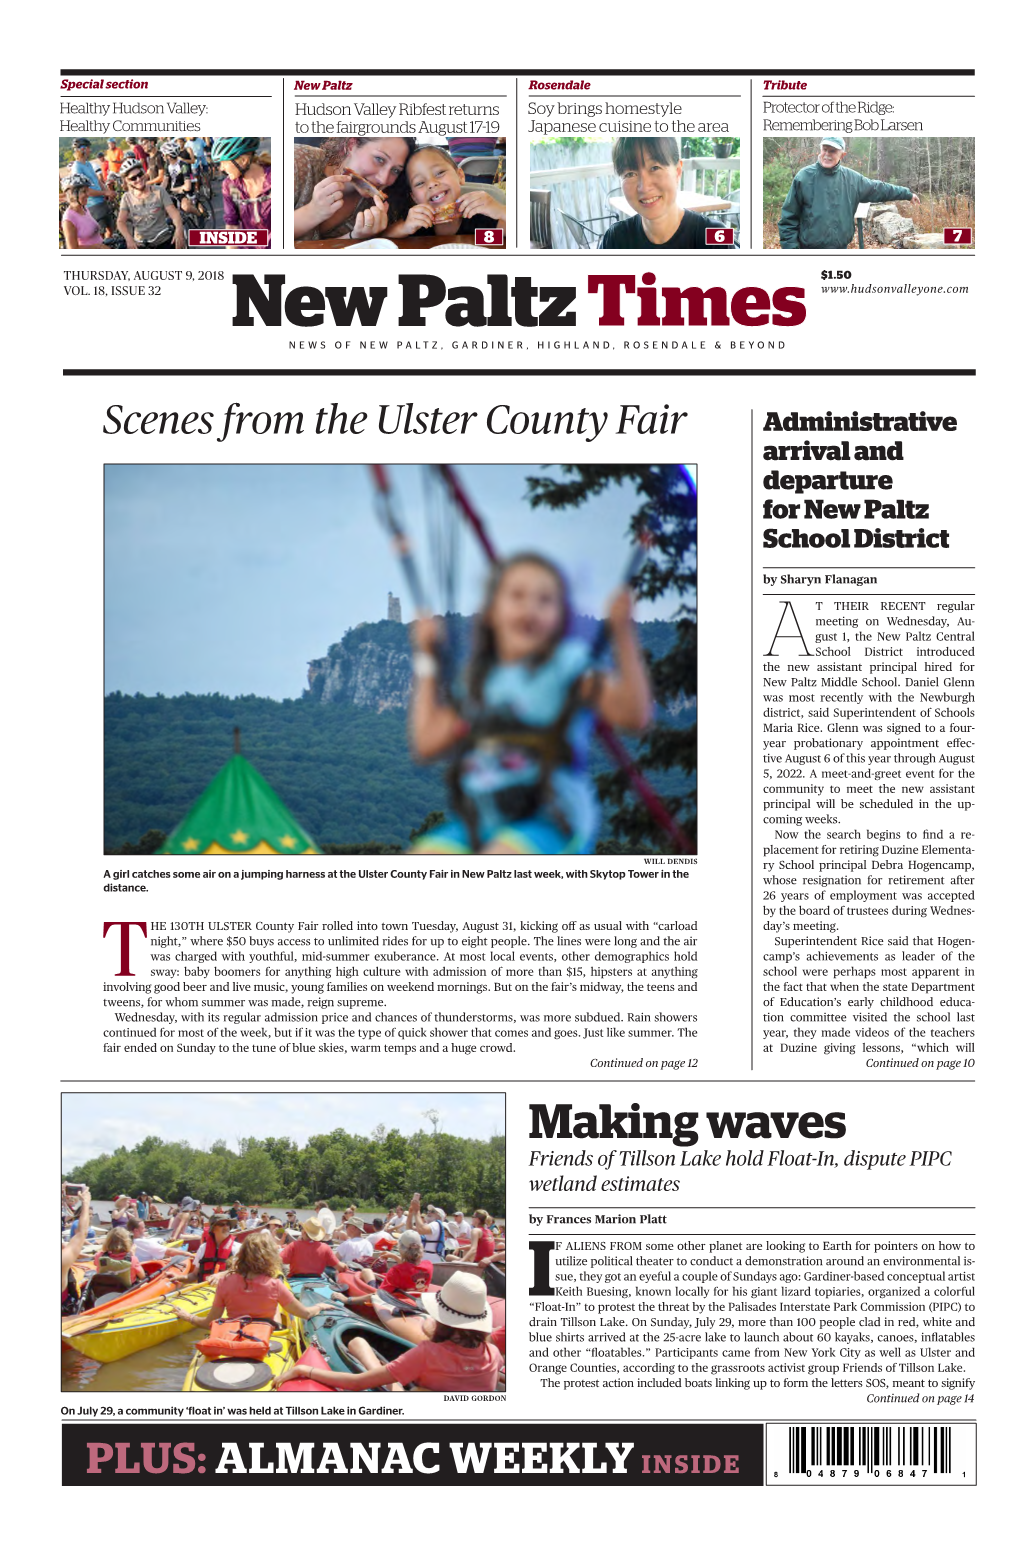 New Paltz Times Briefl Y Noted News of New Paltz, Highland, Gardiner Rosendale & Beyond